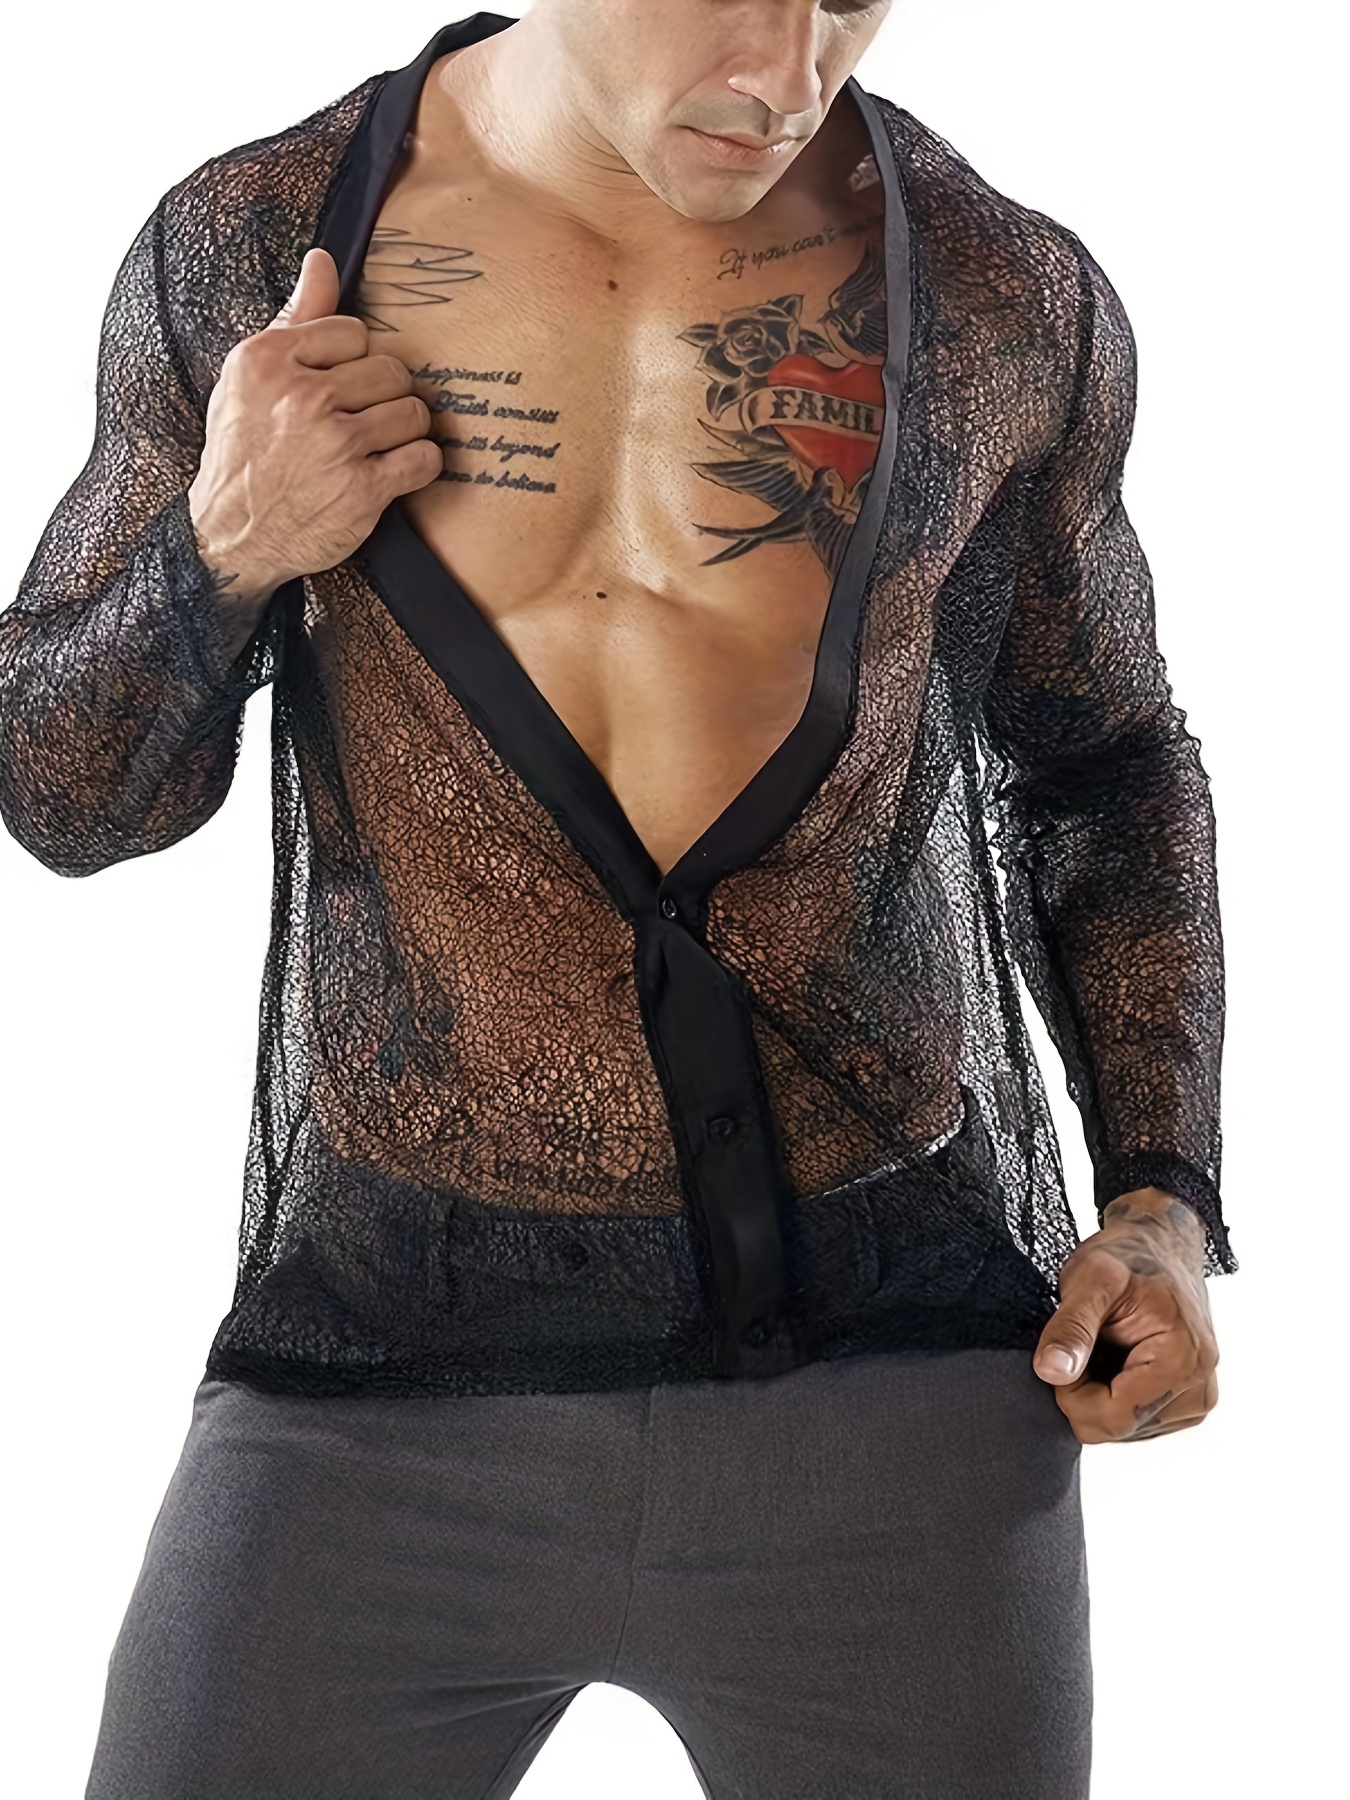 Men's Fishnet Sheer Shirt Tops Long Sleeve Round Neck Tee Shirt See Through  Pullover Tops